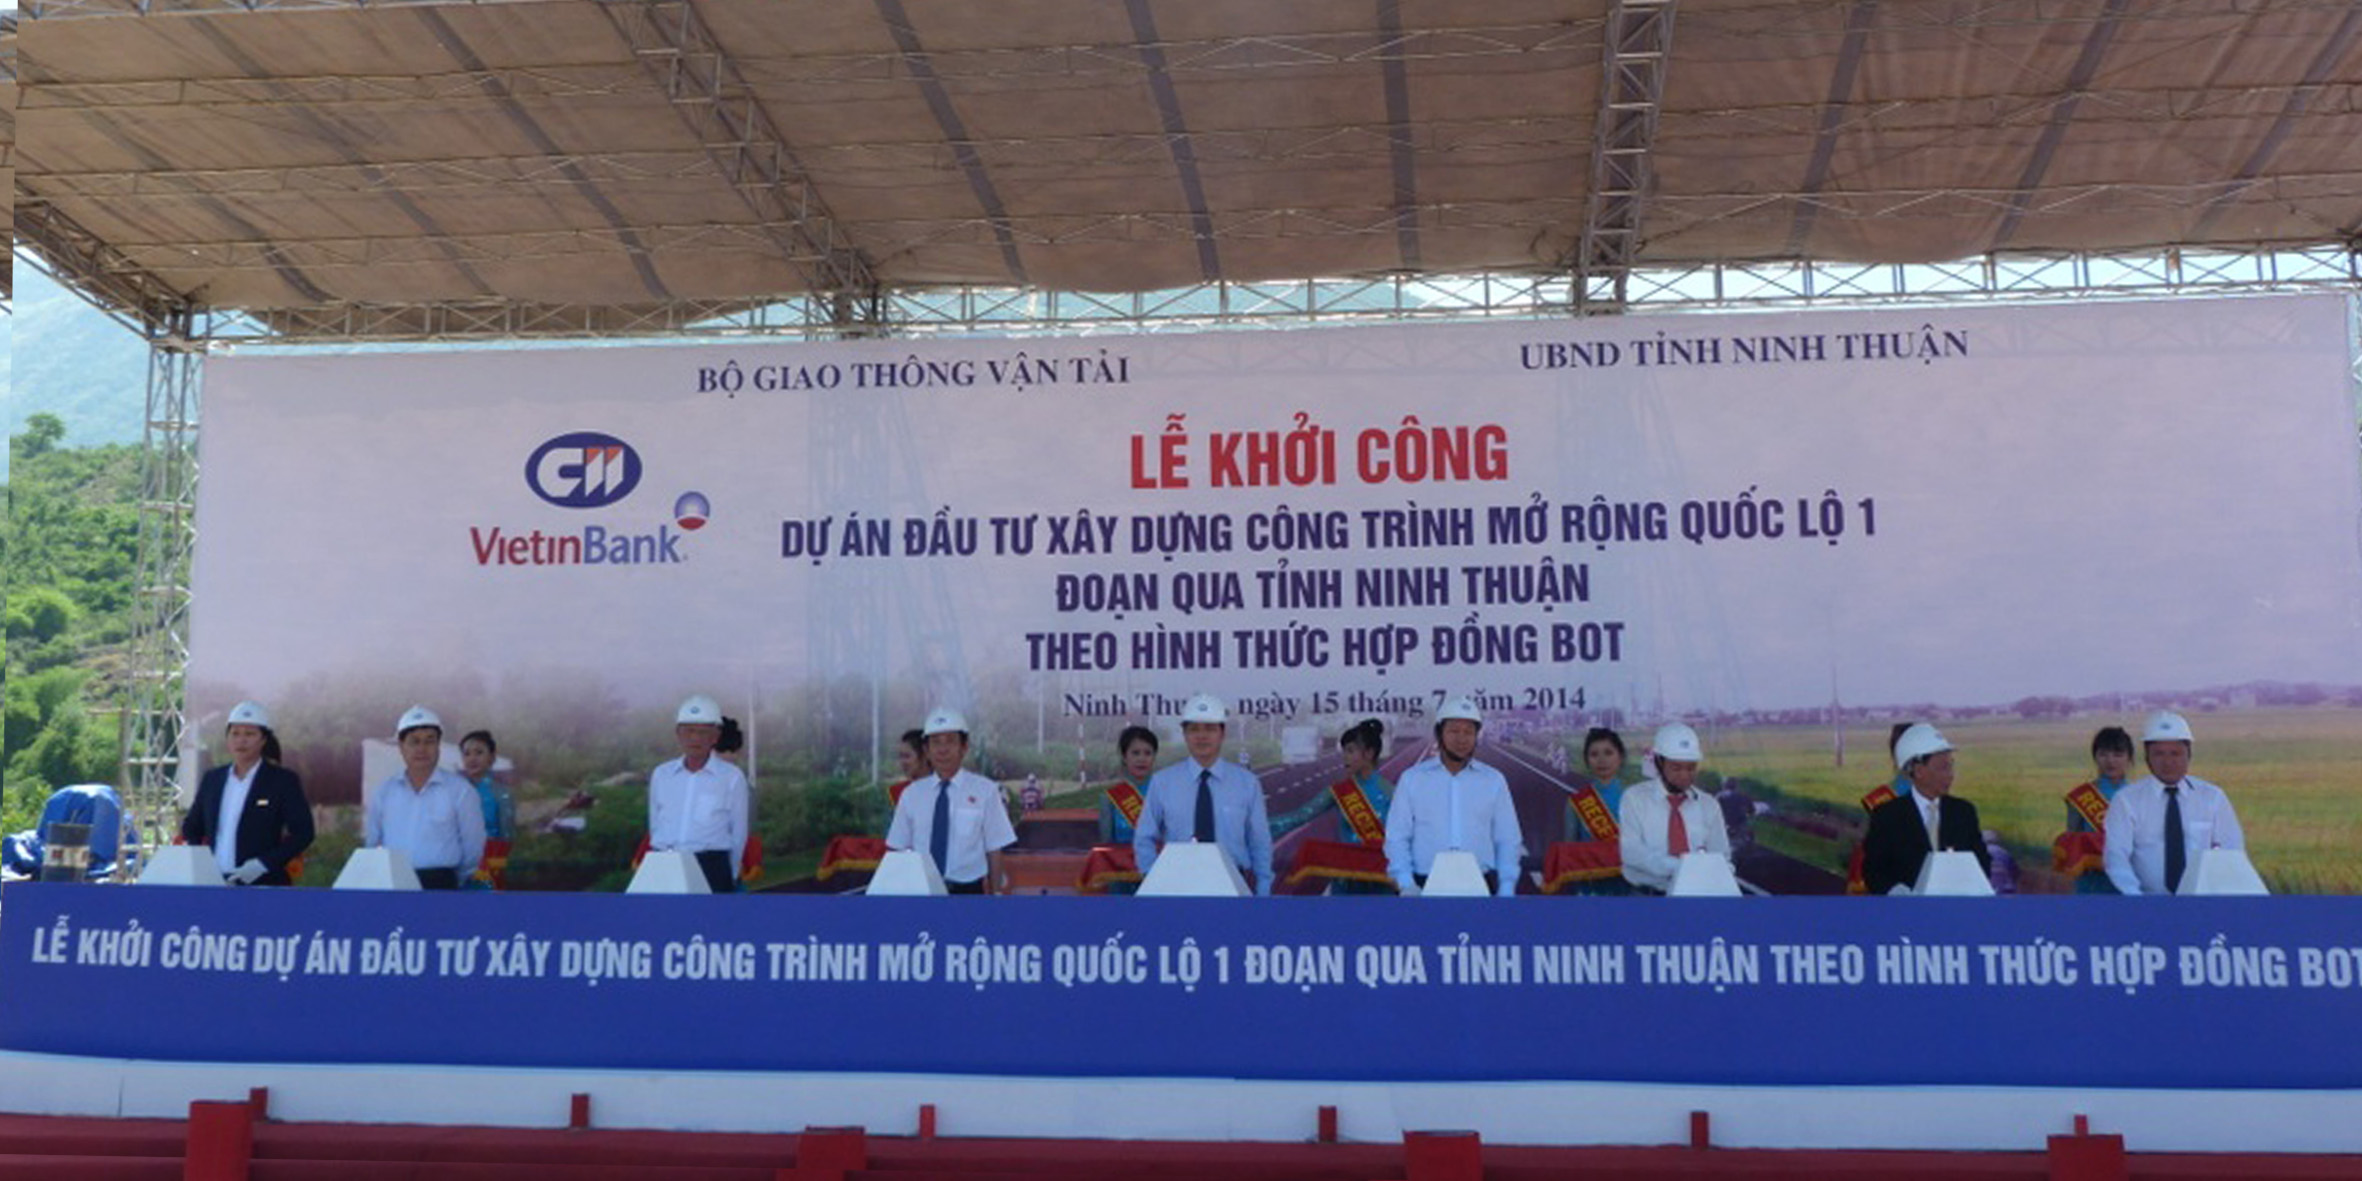 1A National Road in Phan Rang  - Ninh Thuan expanding project